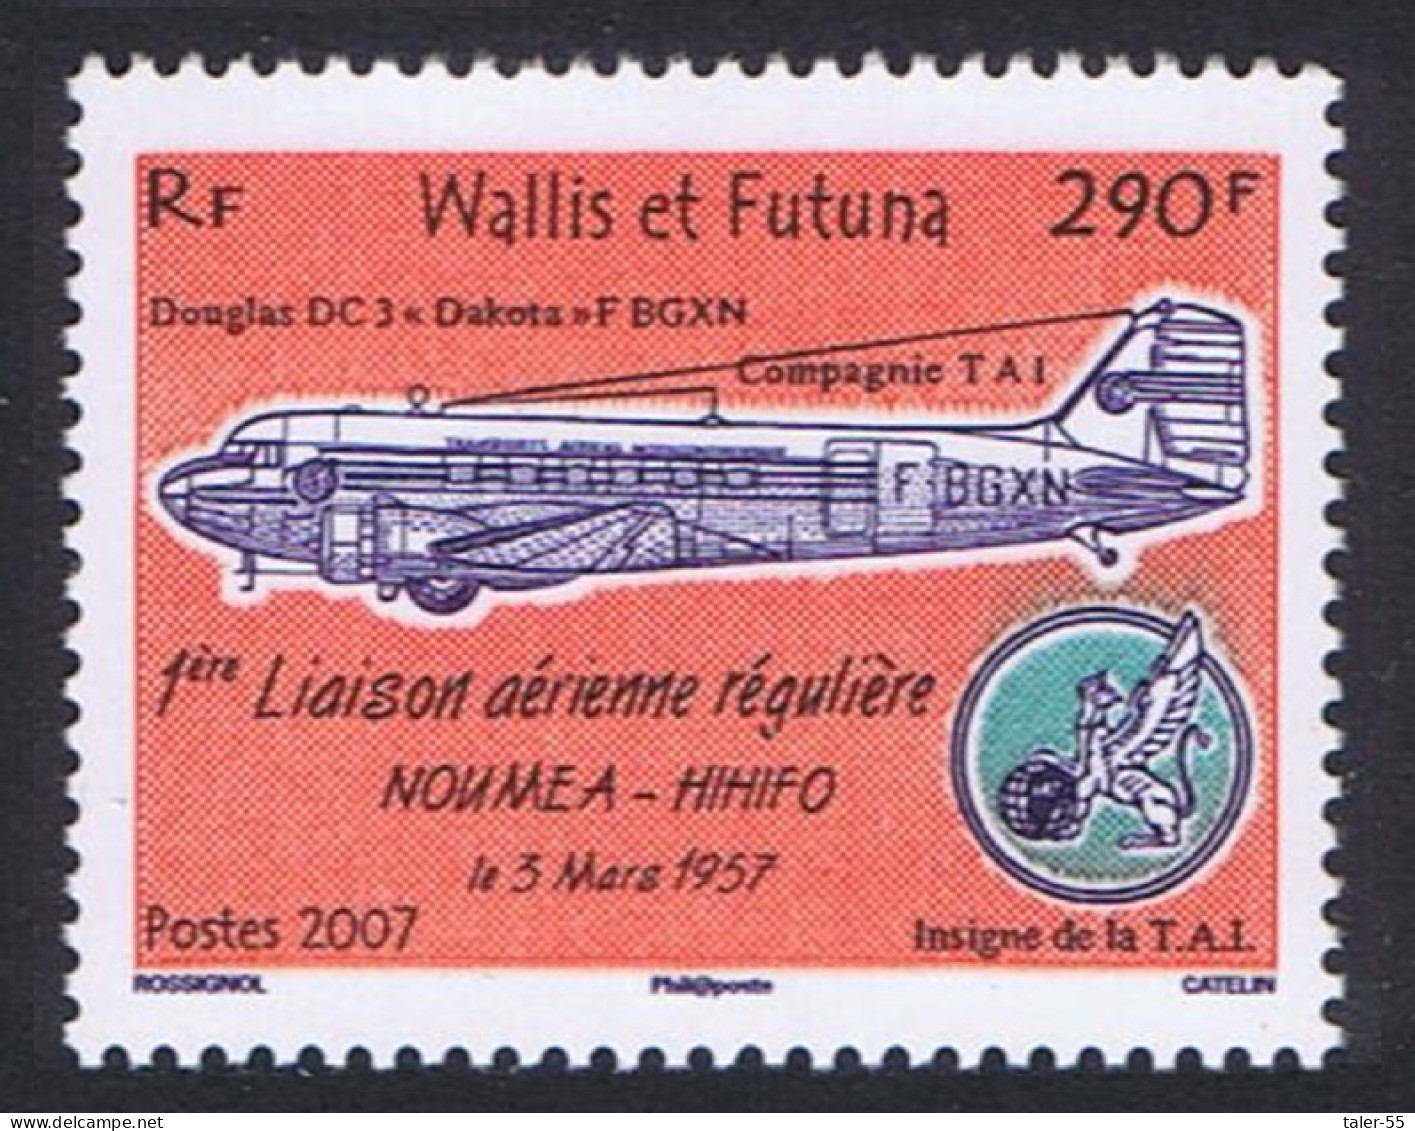 Wallis And Futuna First Regular Flight Noumea-Hihifo 2007 MNH SG#912 - Nuovi